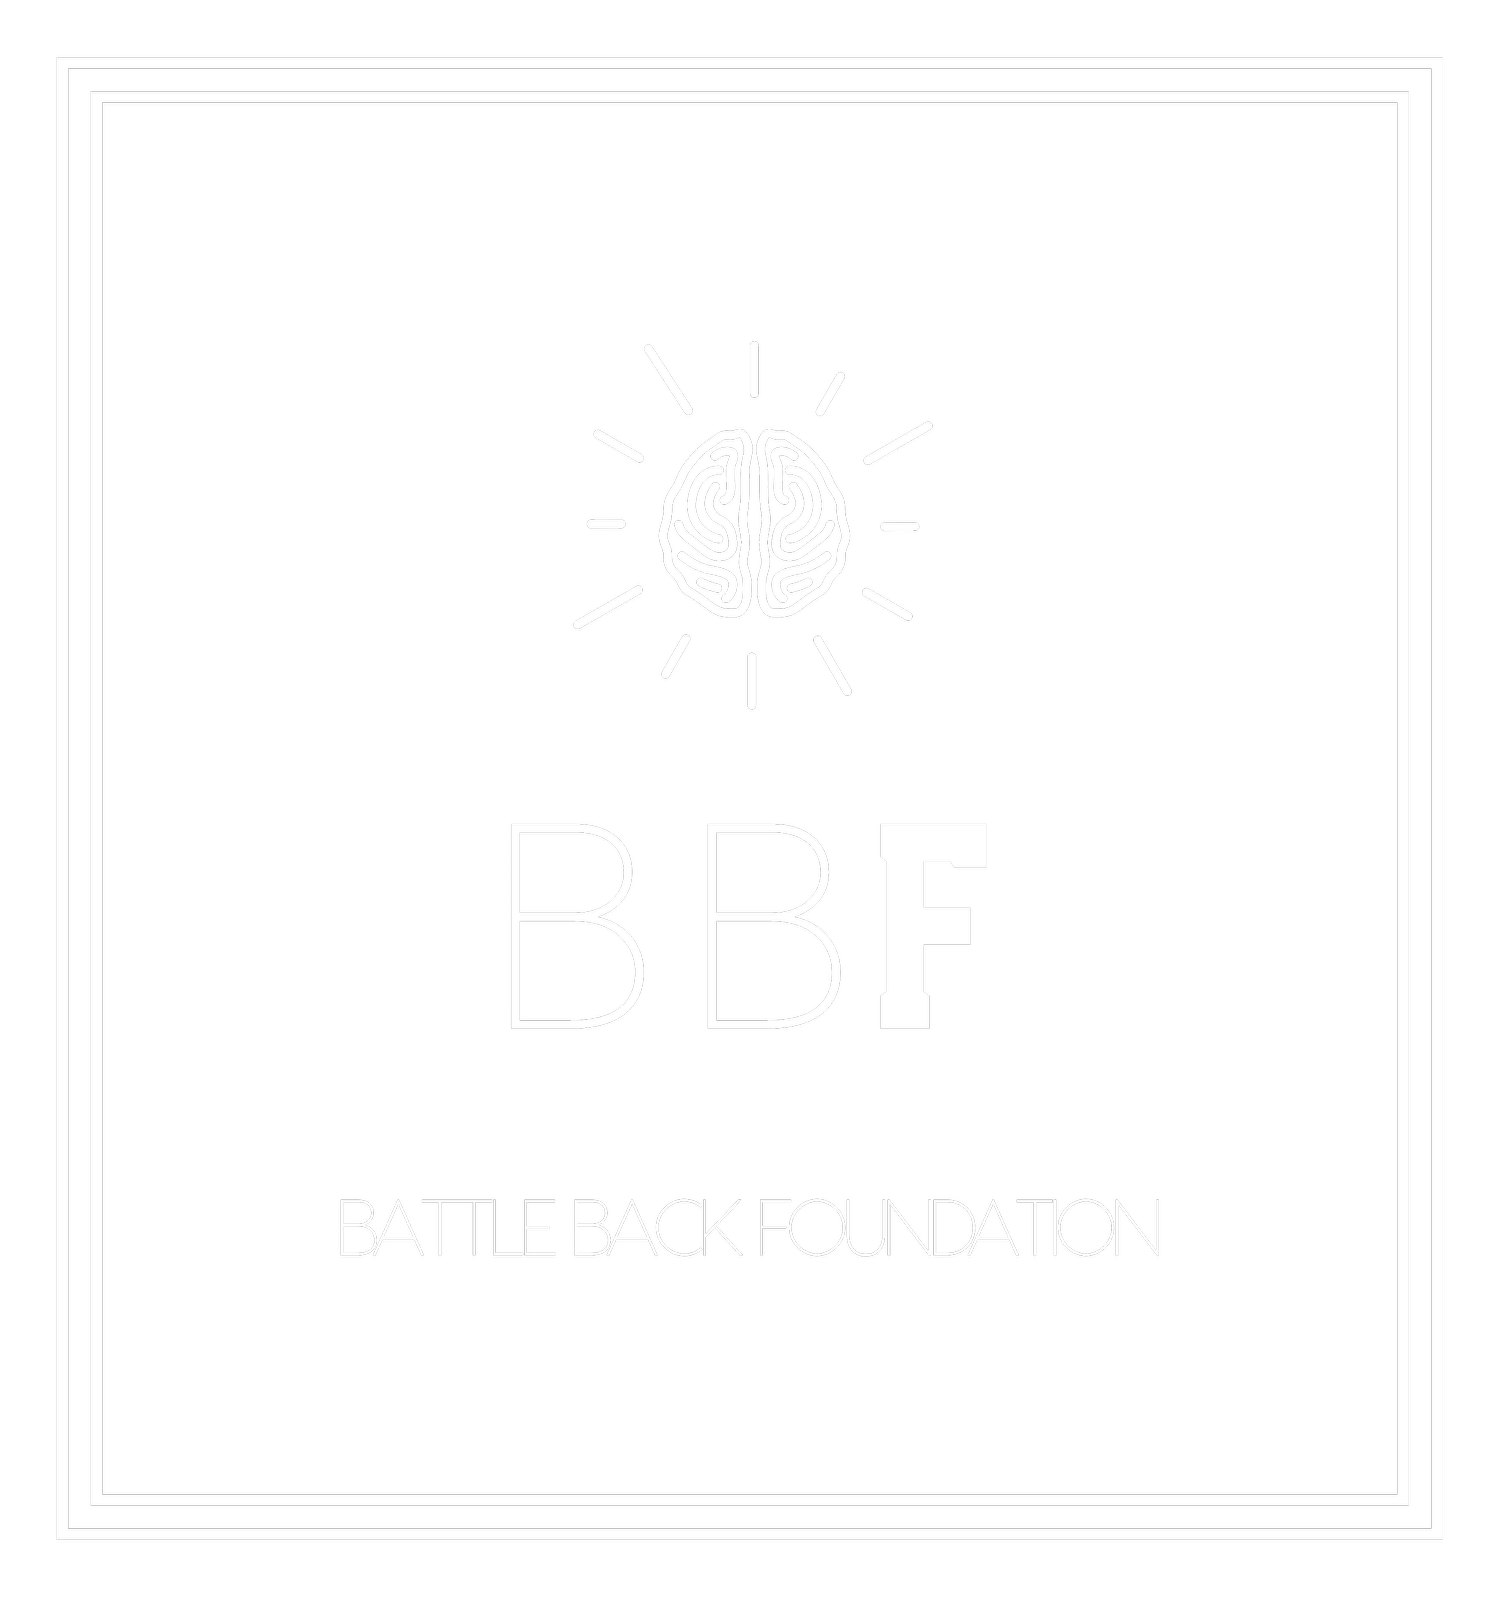 Battle Back Foundation